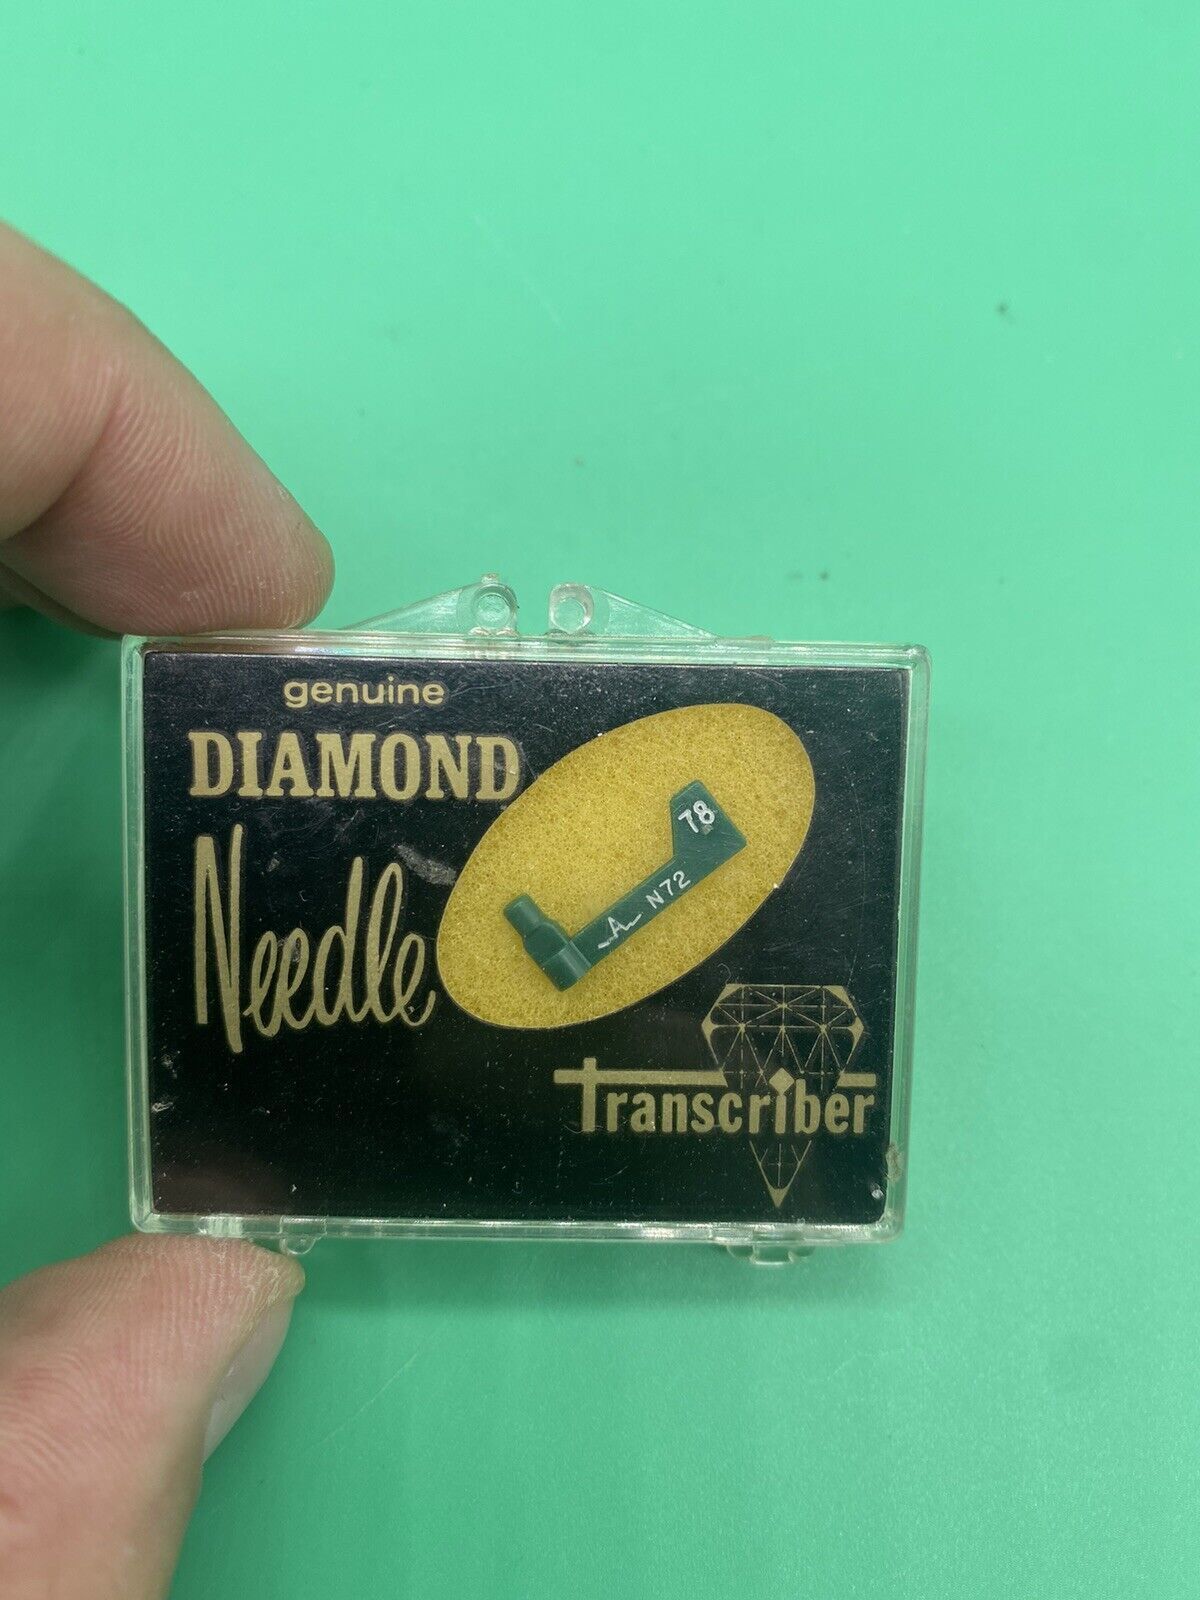 Transcriber Diamond Phonograph Astatic Needle N72 PS-67, N-60 New